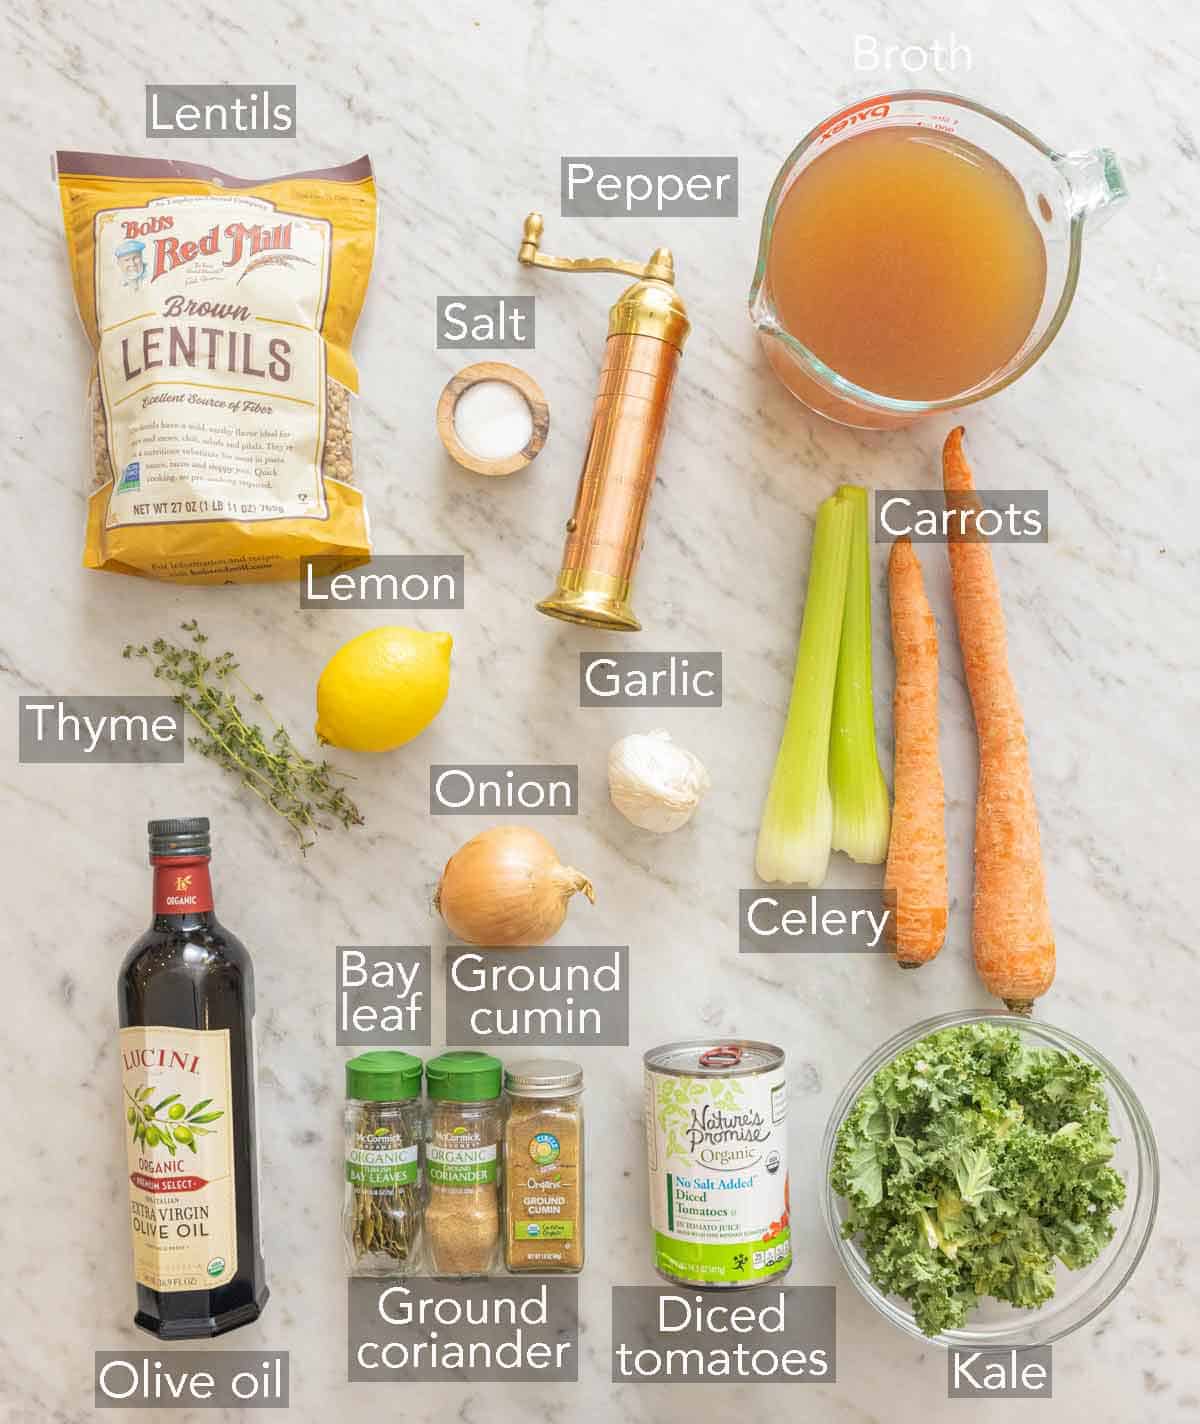 Ingredients needed to make lentil soup.